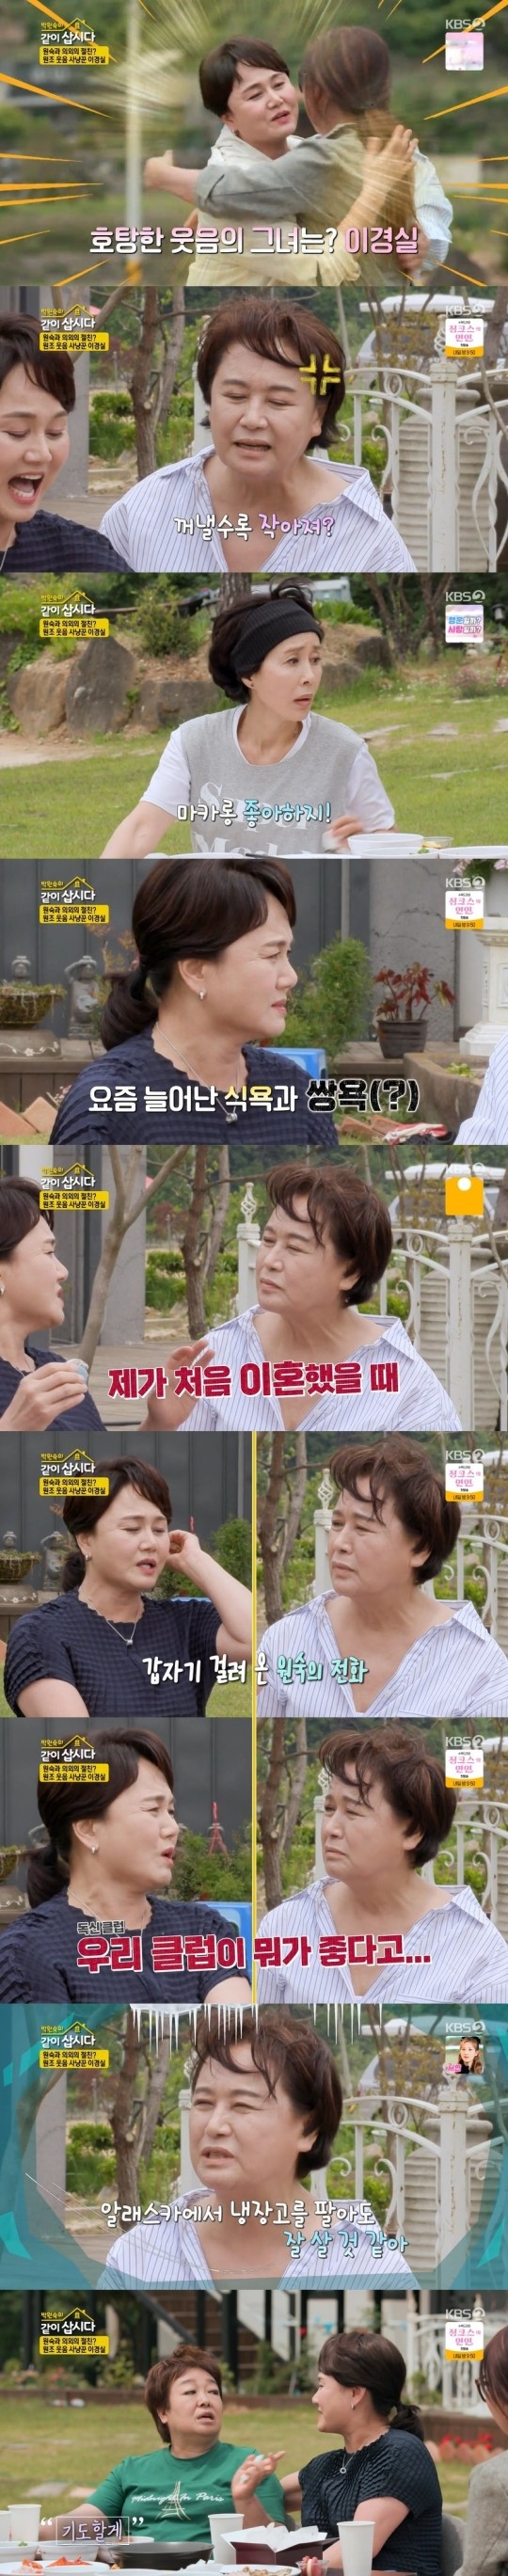 KBS 2TV 예능 프로그램 ‘박원숙의 같이삽시다 시즌3’ 제공